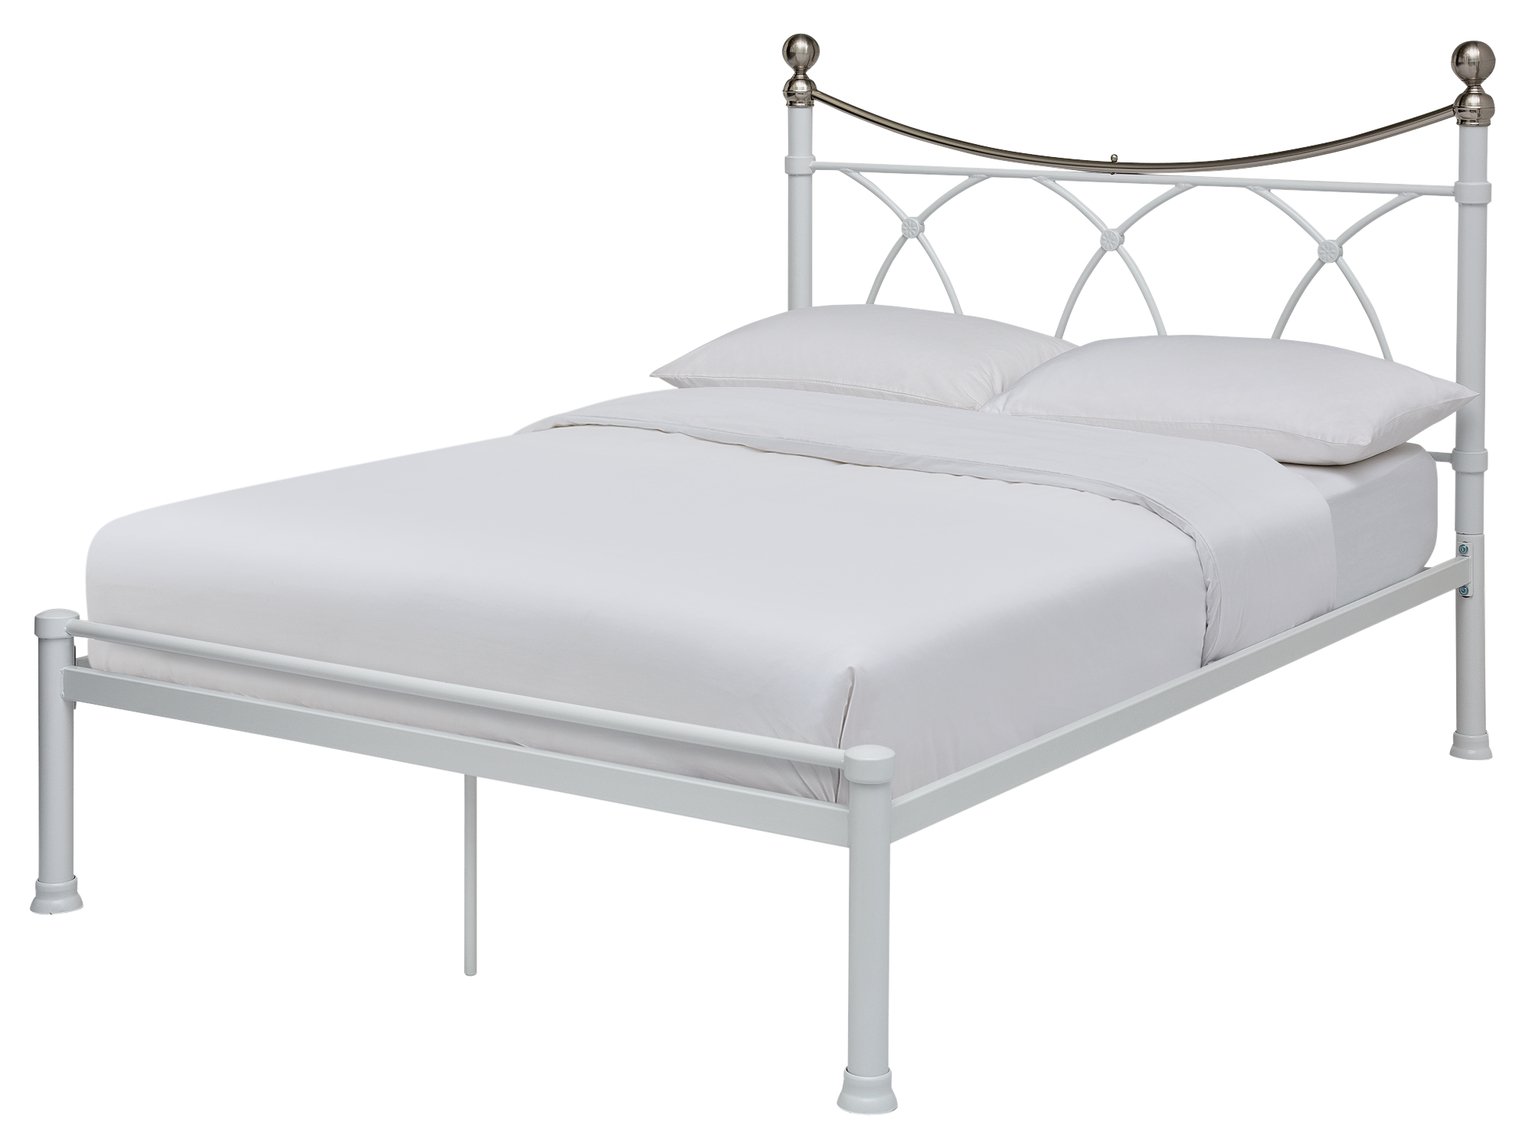 Argos Home Ricossa Double Bed Frame - White